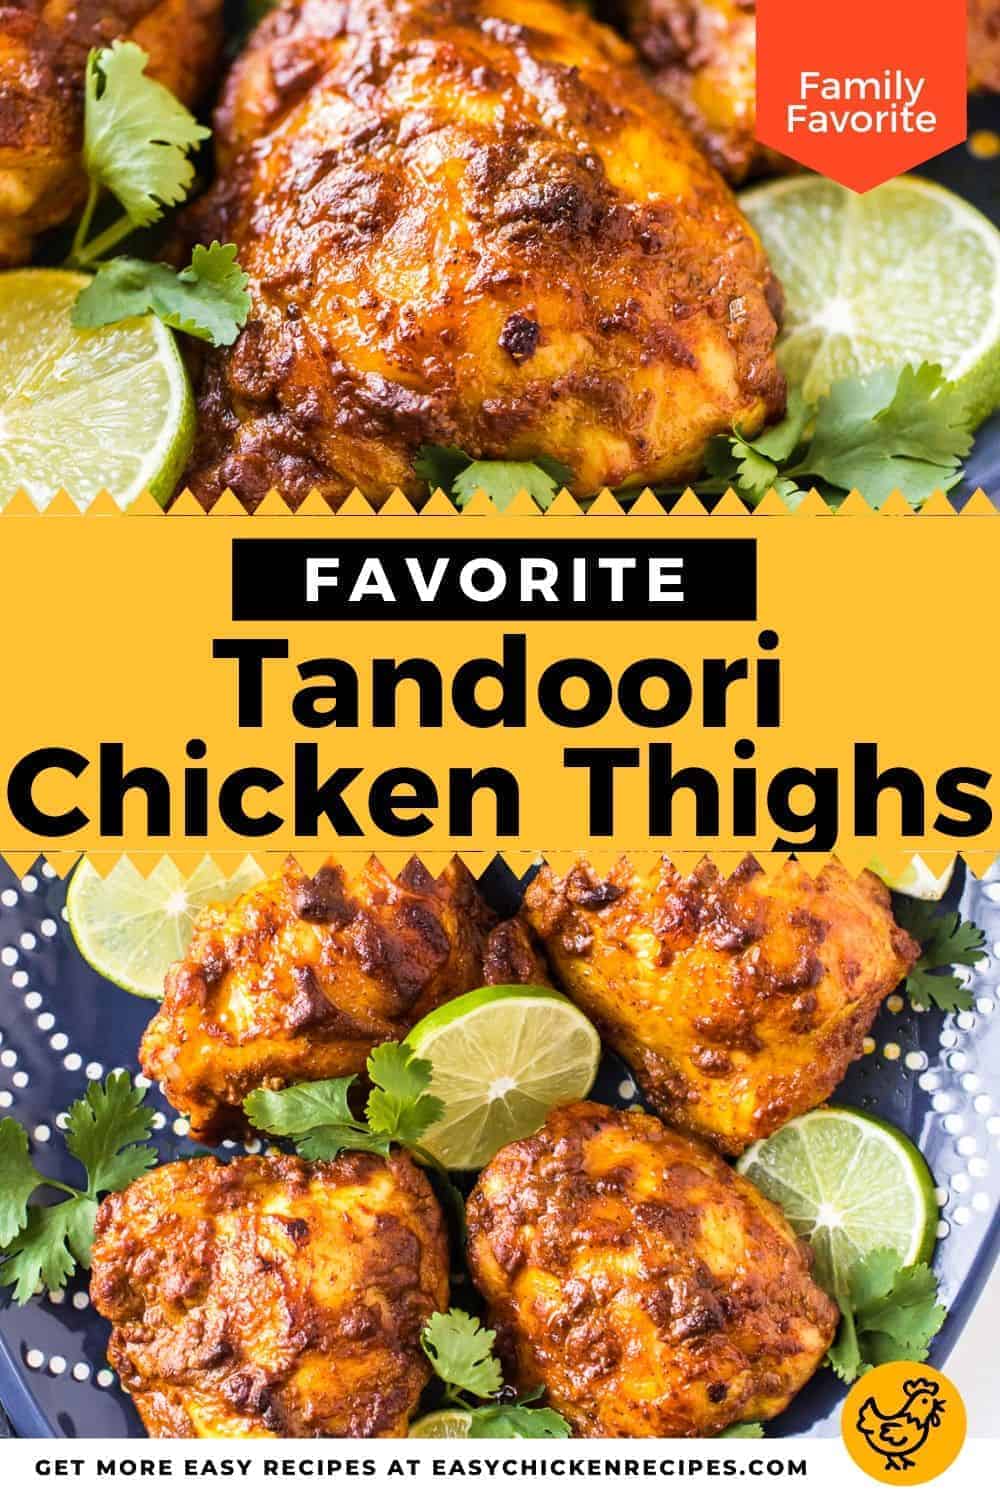 Tandoori Chicken Thighs - Easy Chicken Recipes